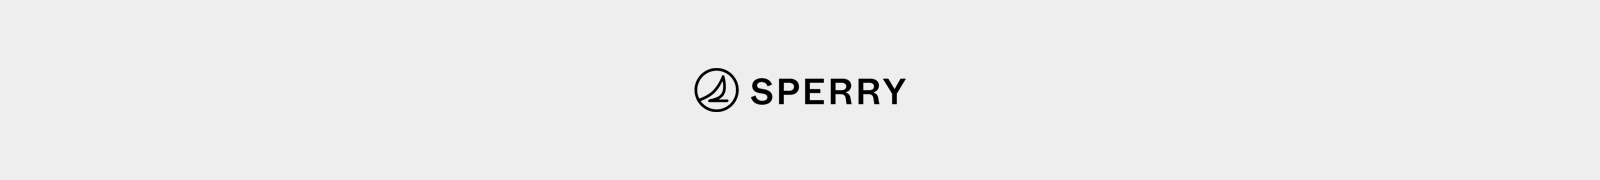 Sperry header image